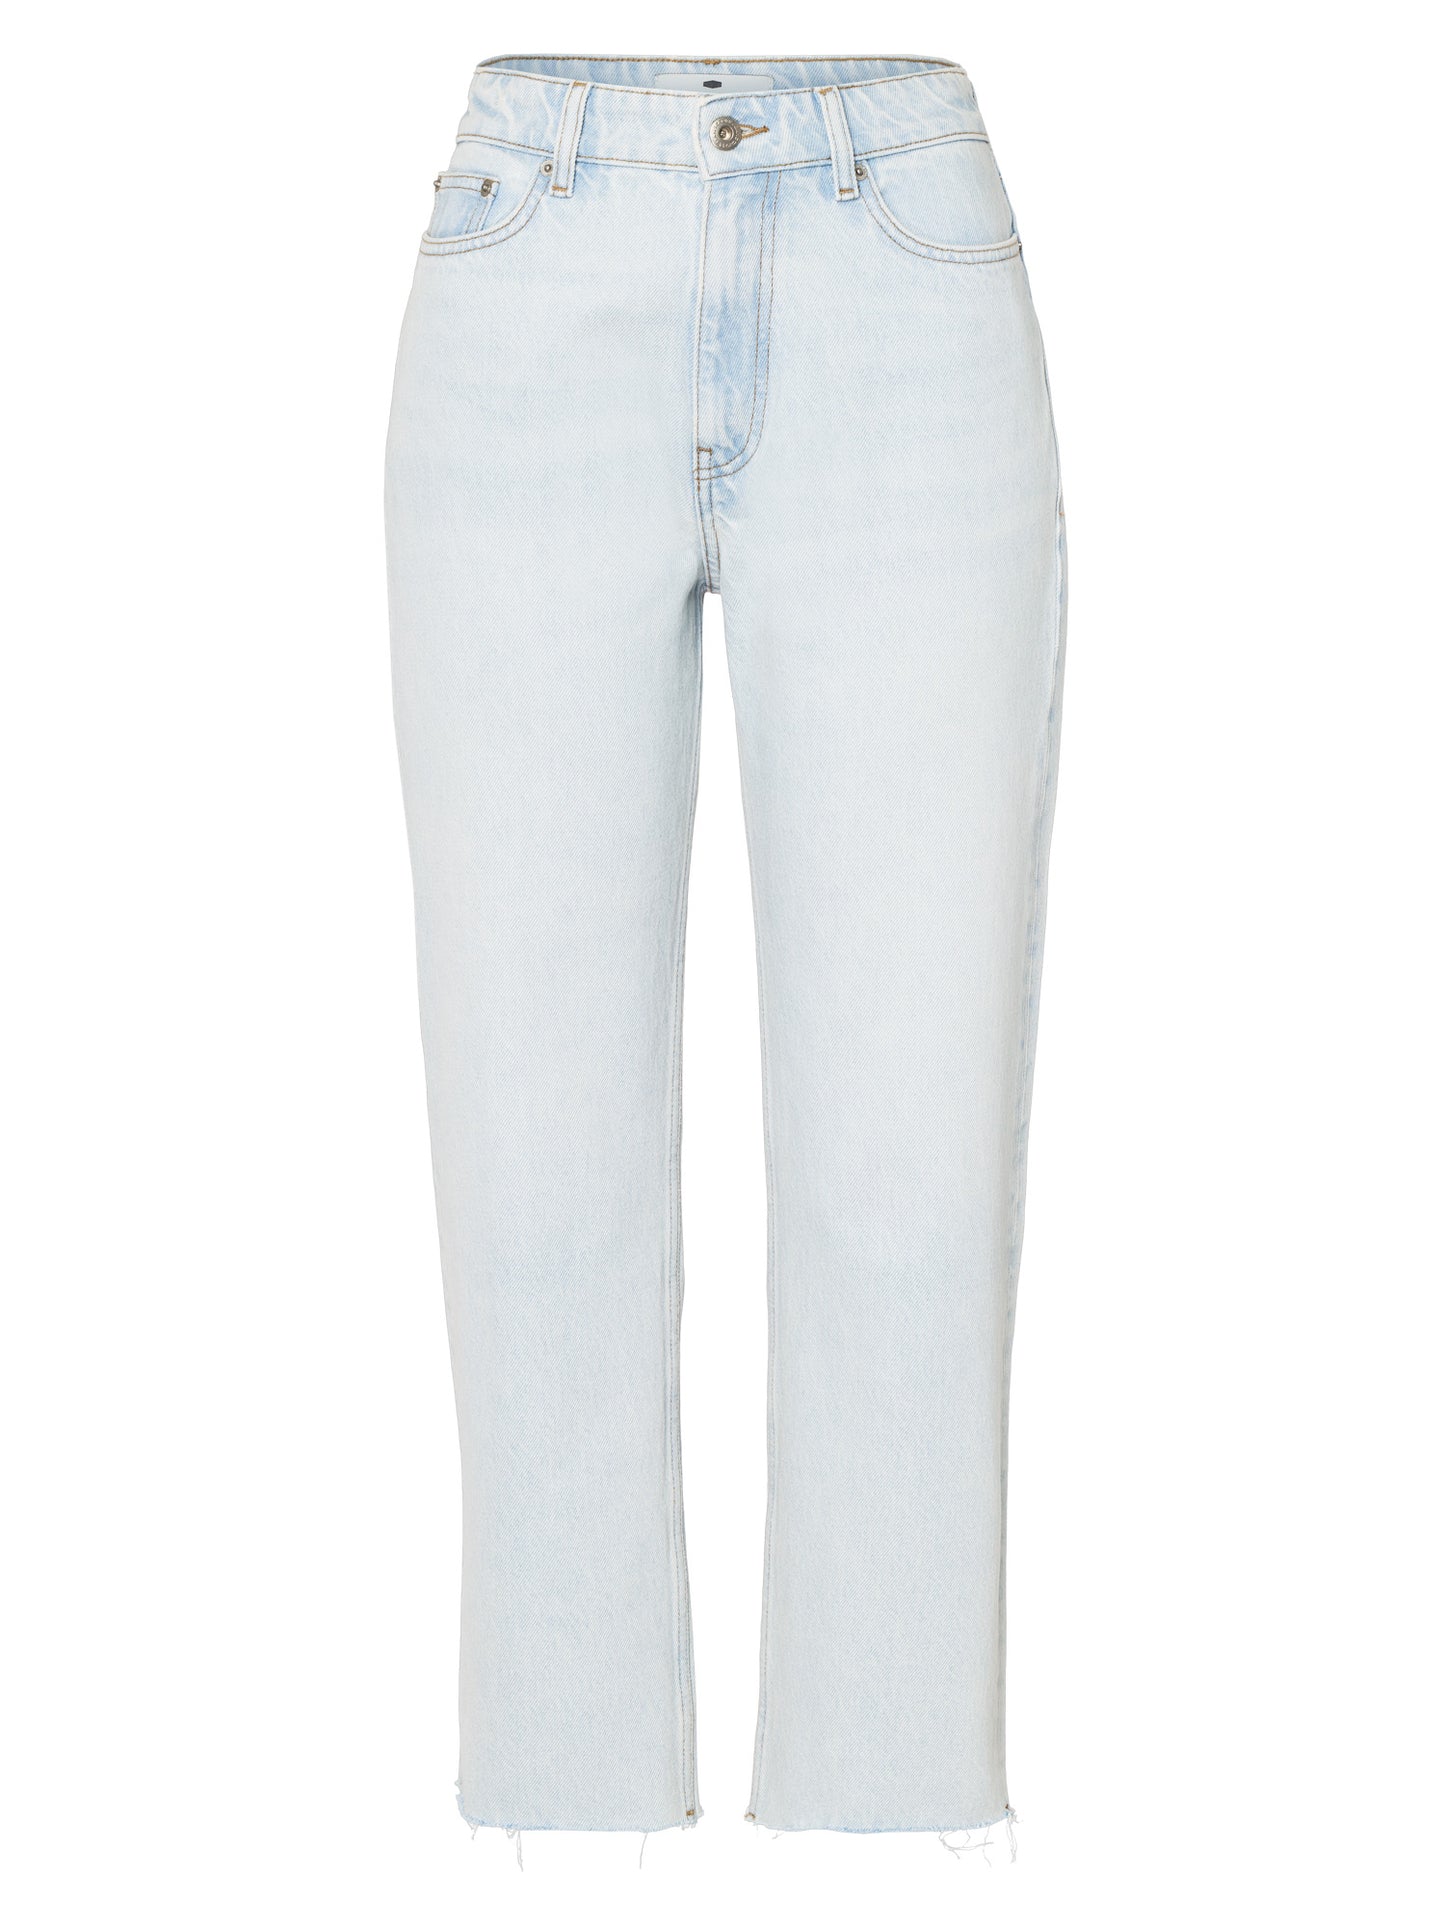 Karlie women's jeans straight fit high waist cropped light blue